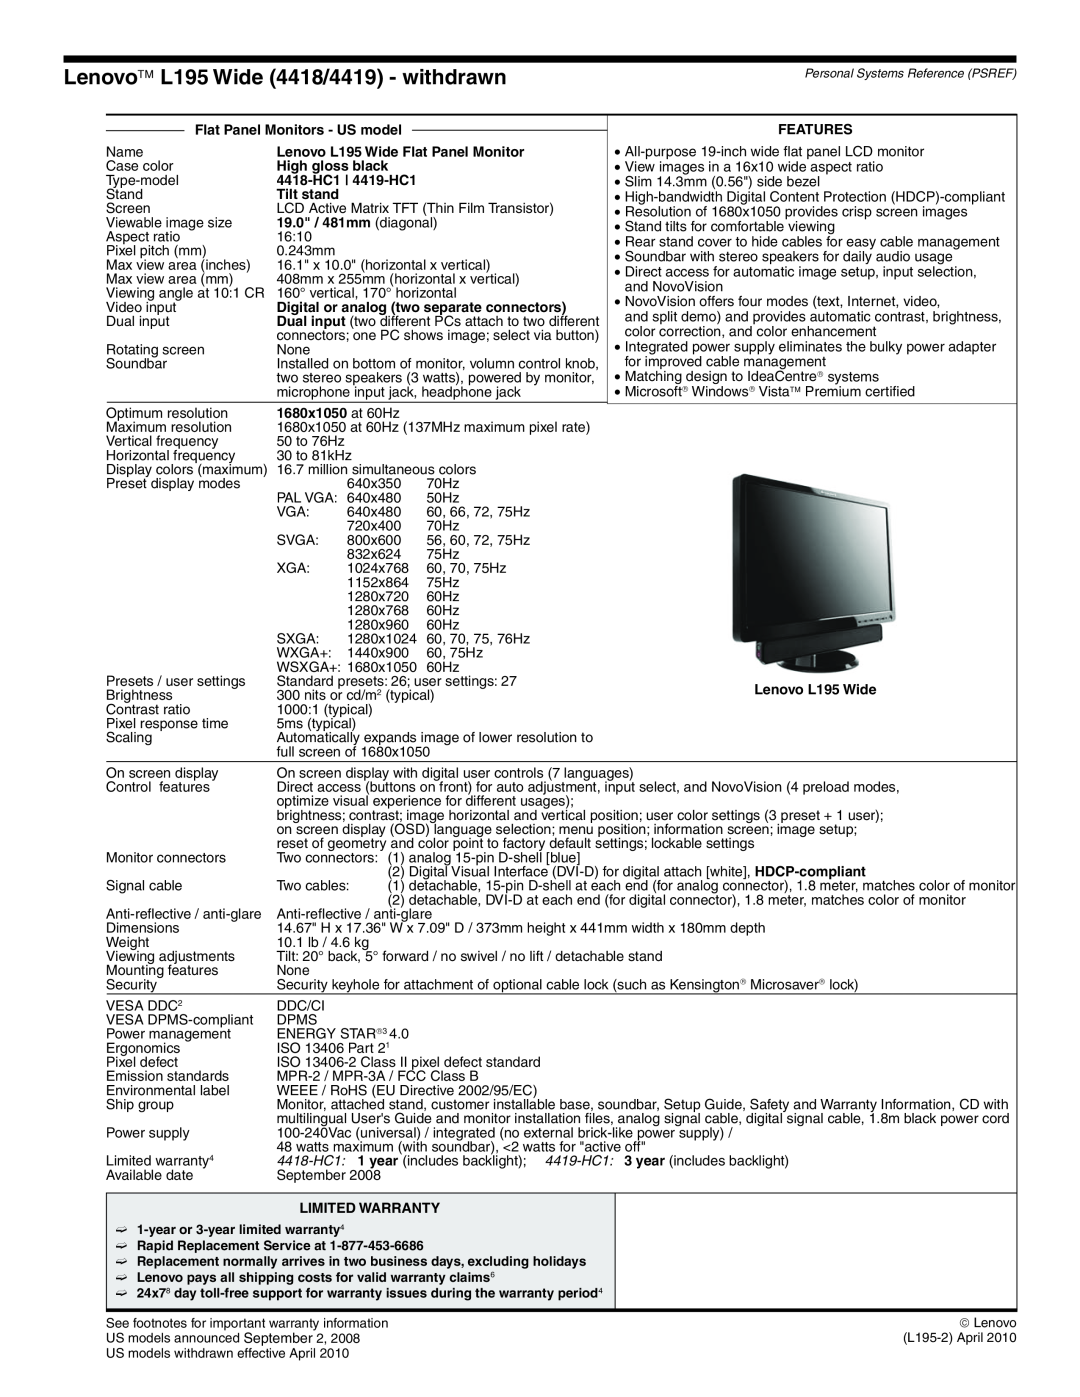 Lenovo L2363D manual Lenovo L195 Wide 4418/4419 - withdrawn 